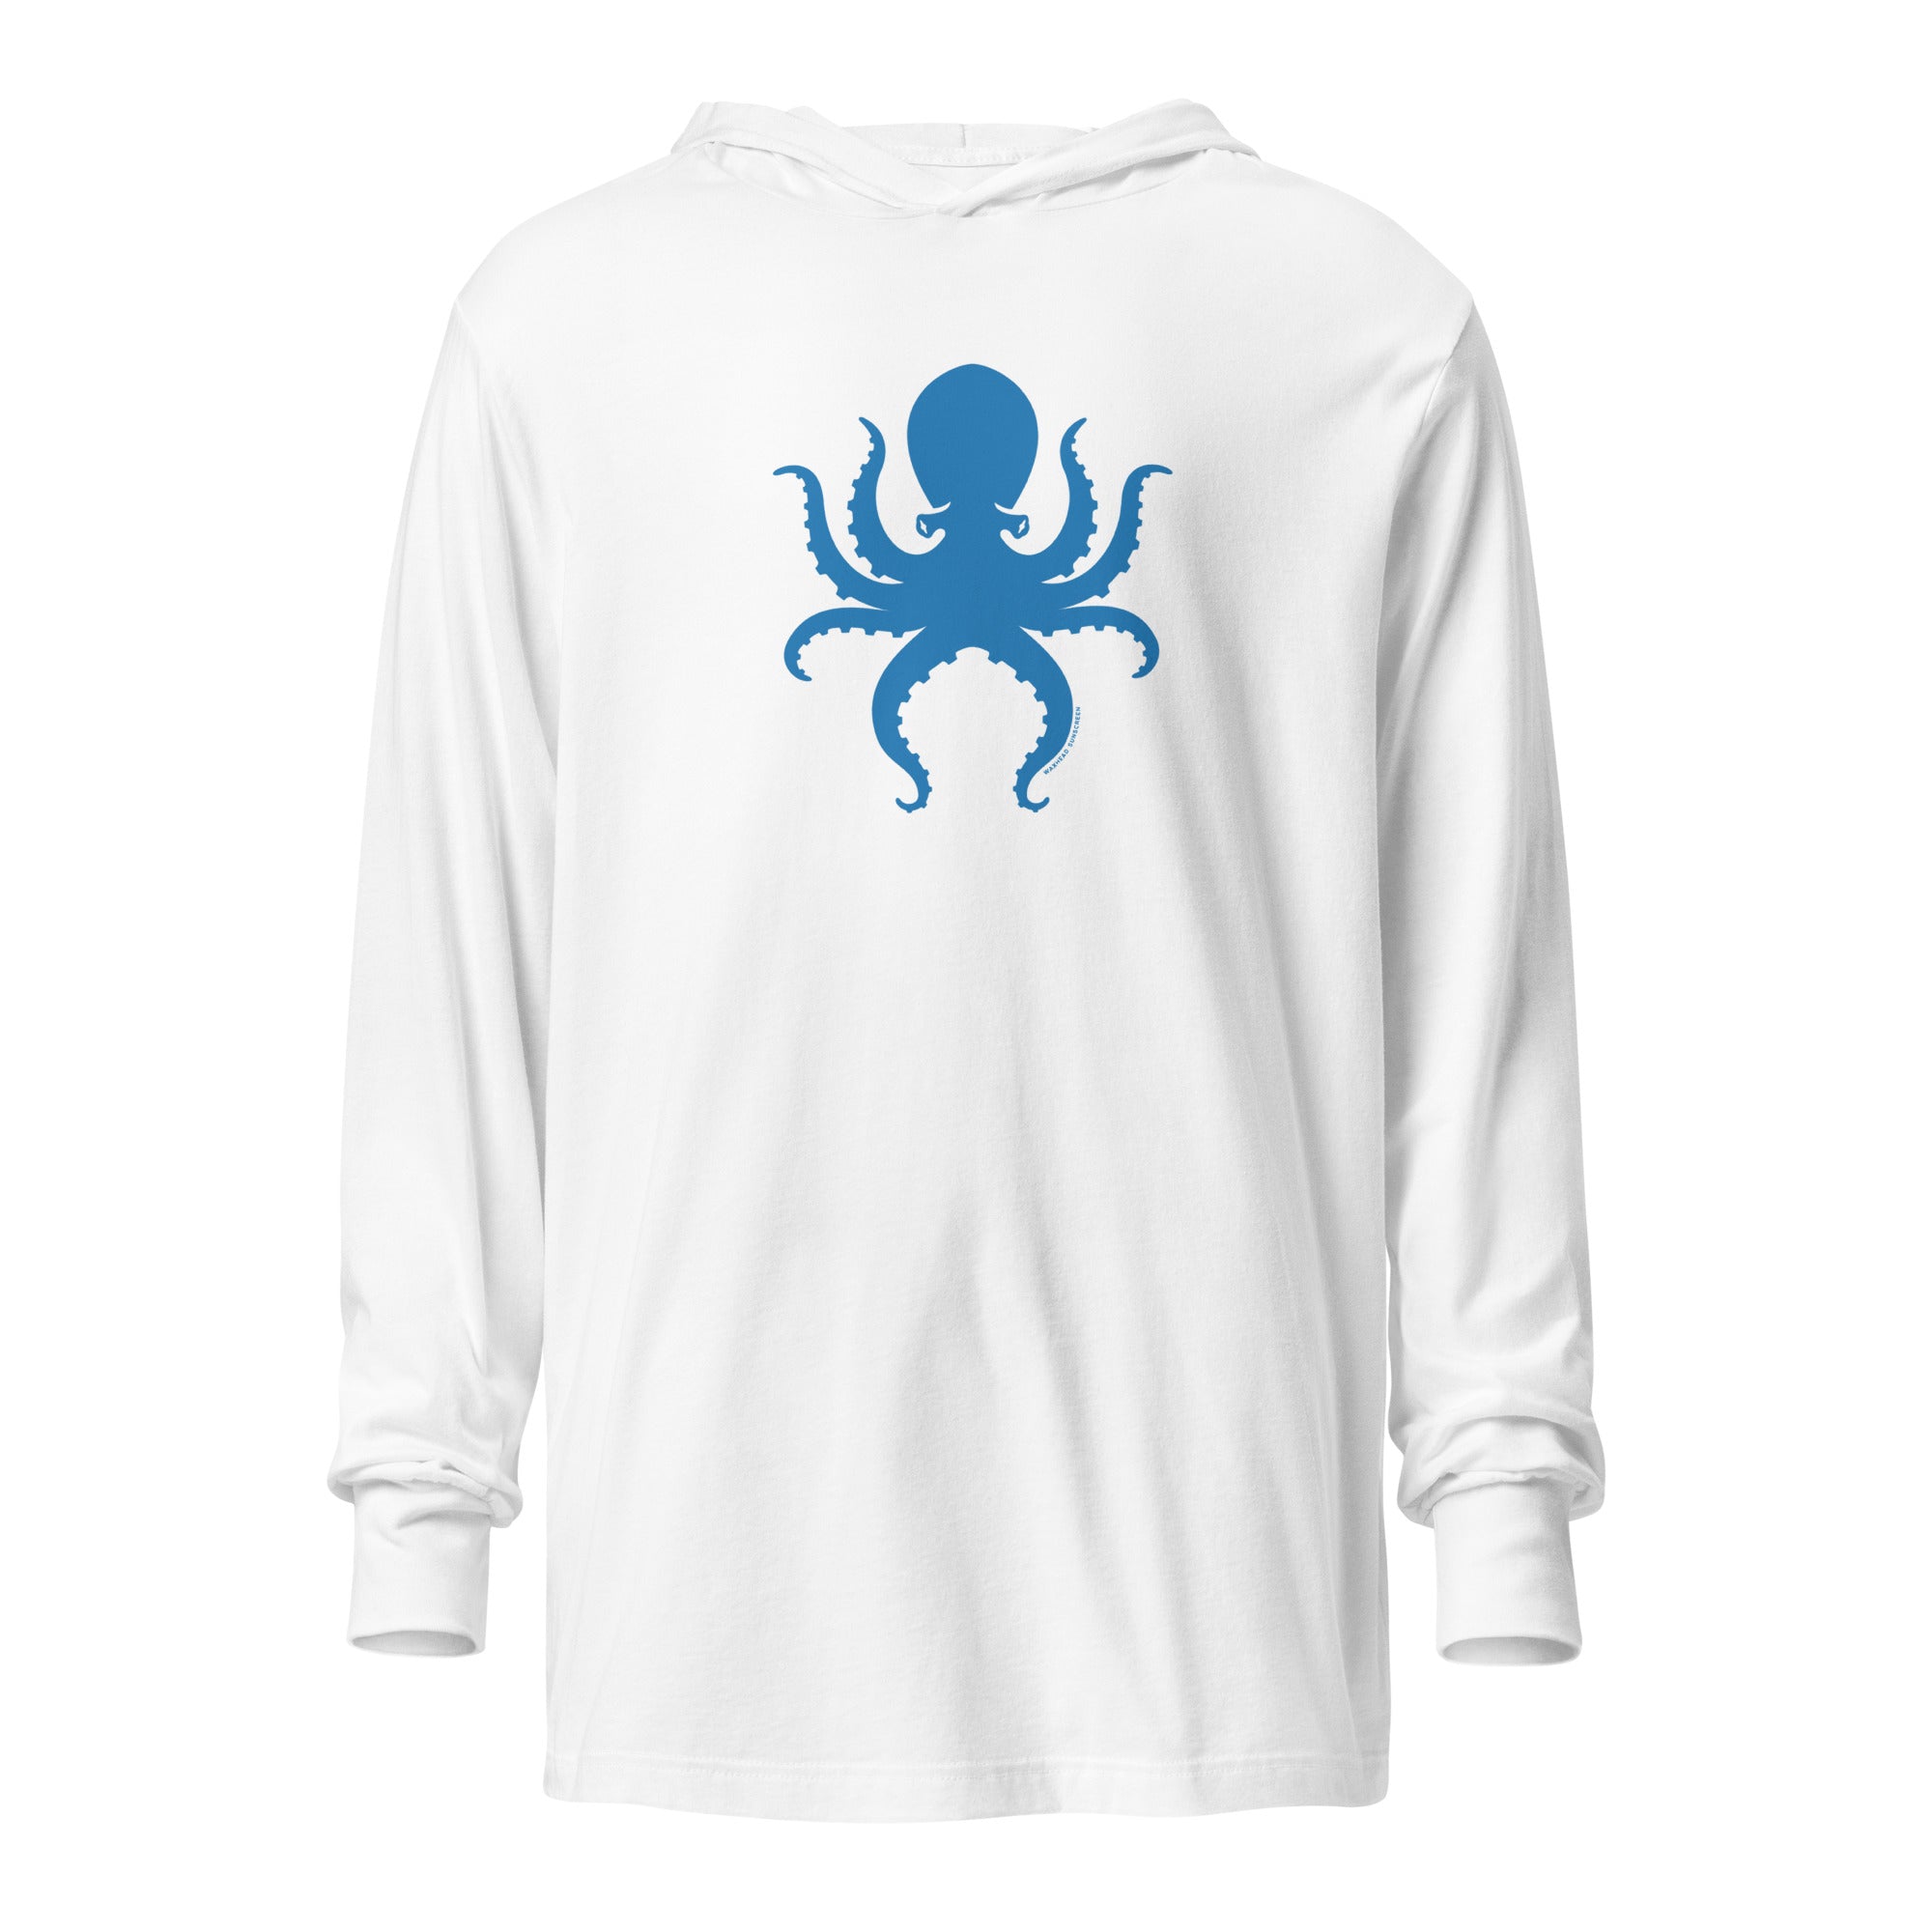 Octopus Long Sleeve T